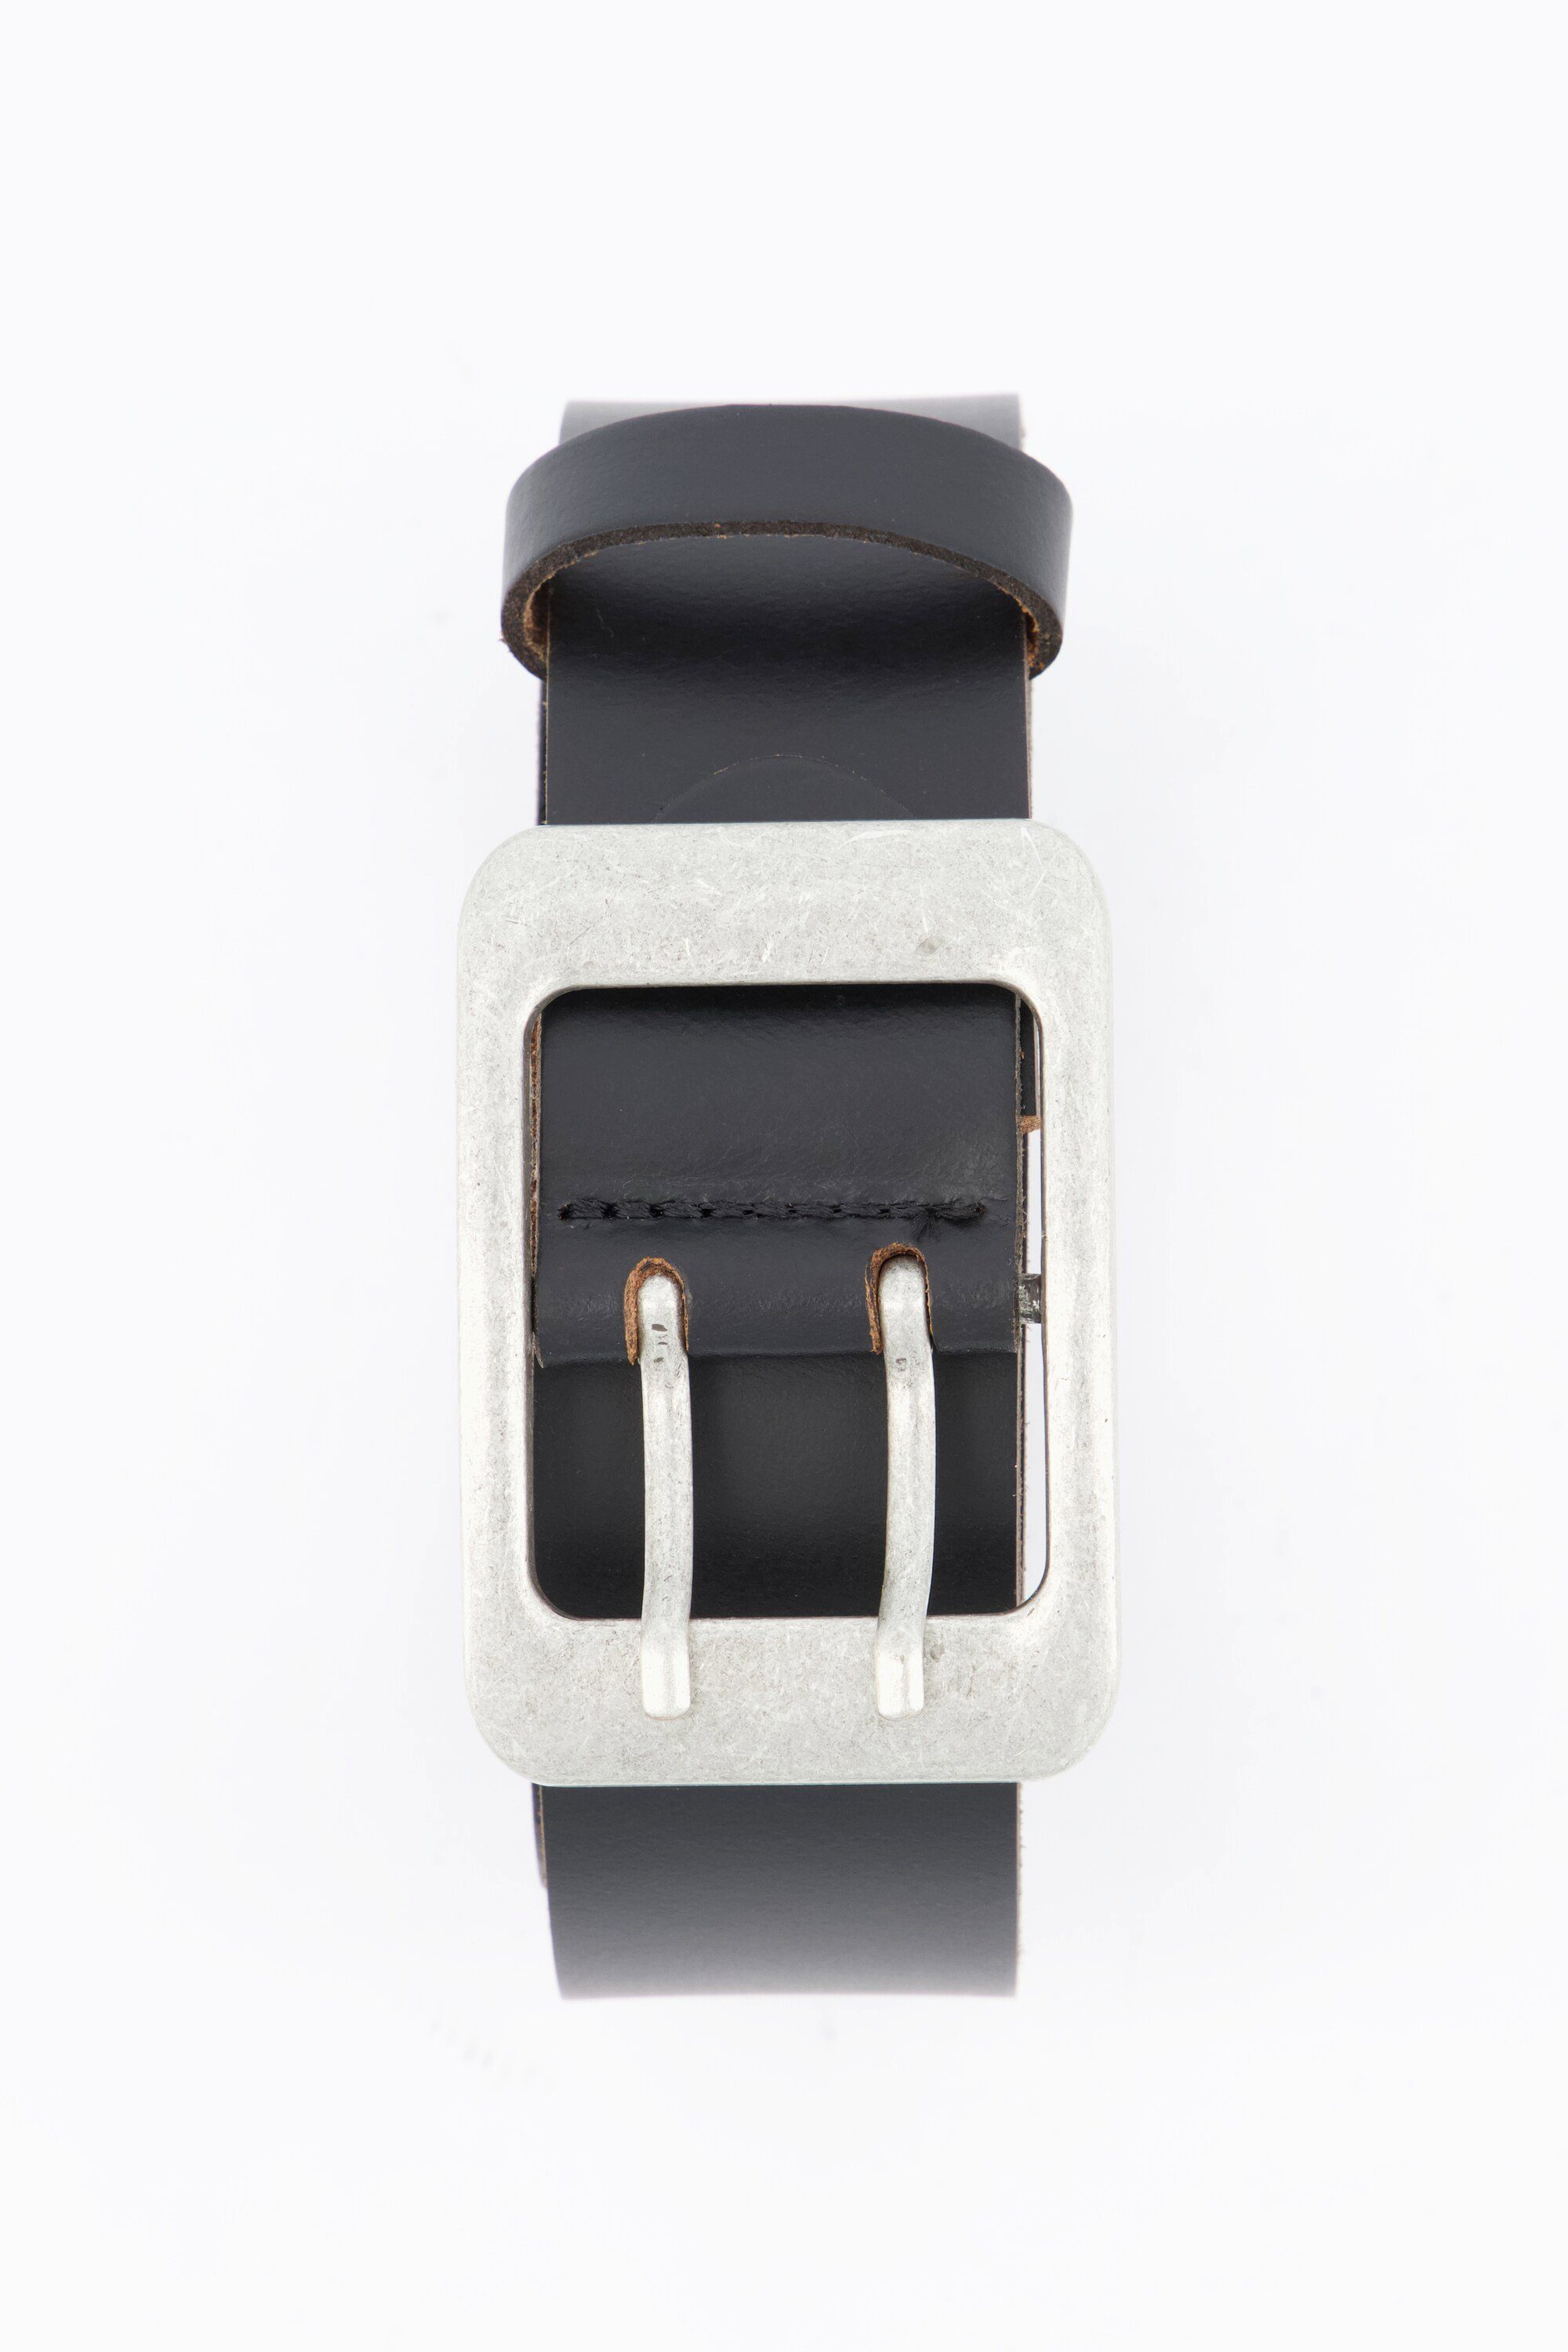 Doppel Leder Gürtel Leder Schließe JP1880 echtes Hüftgürtel